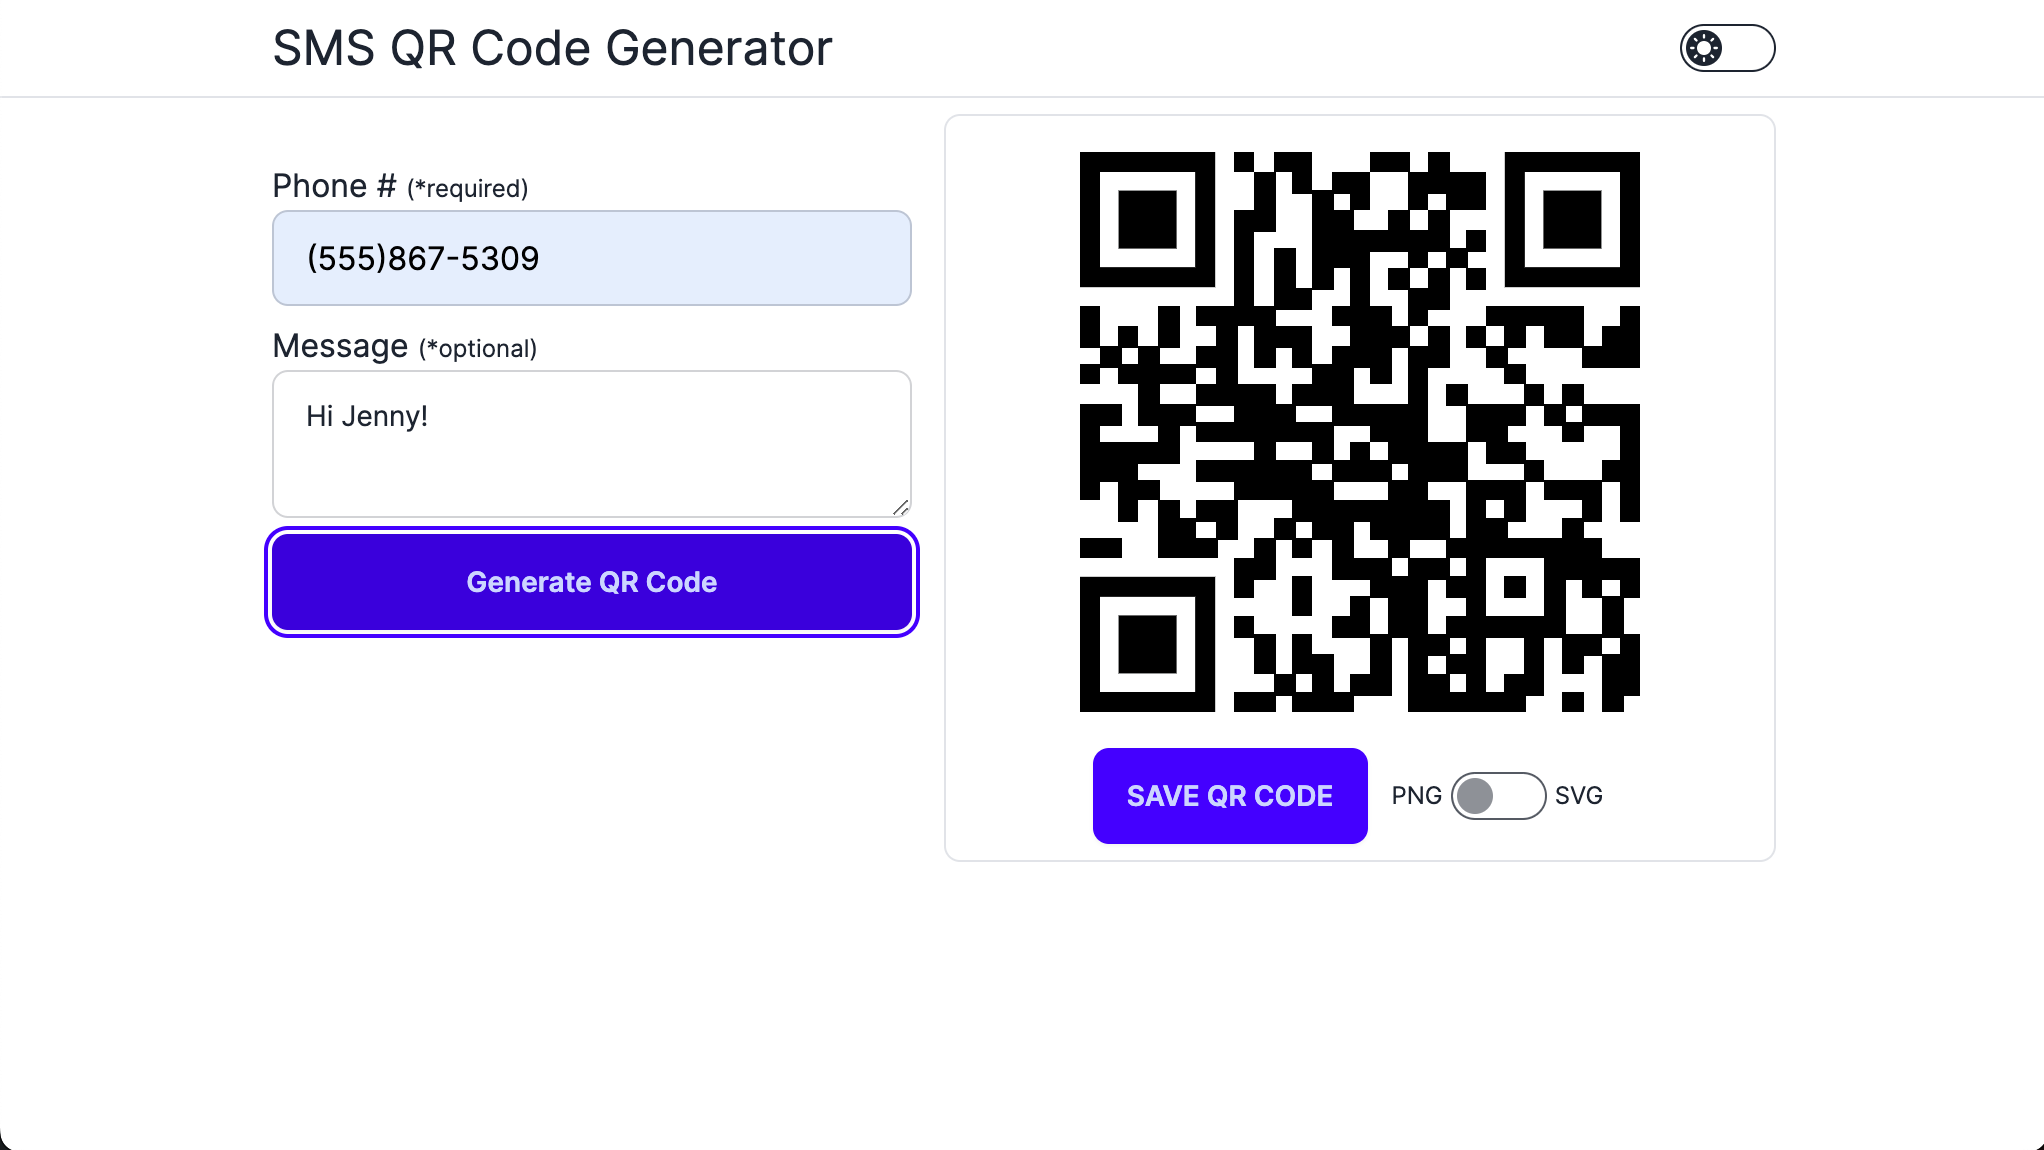 SMS Qr Code Generator